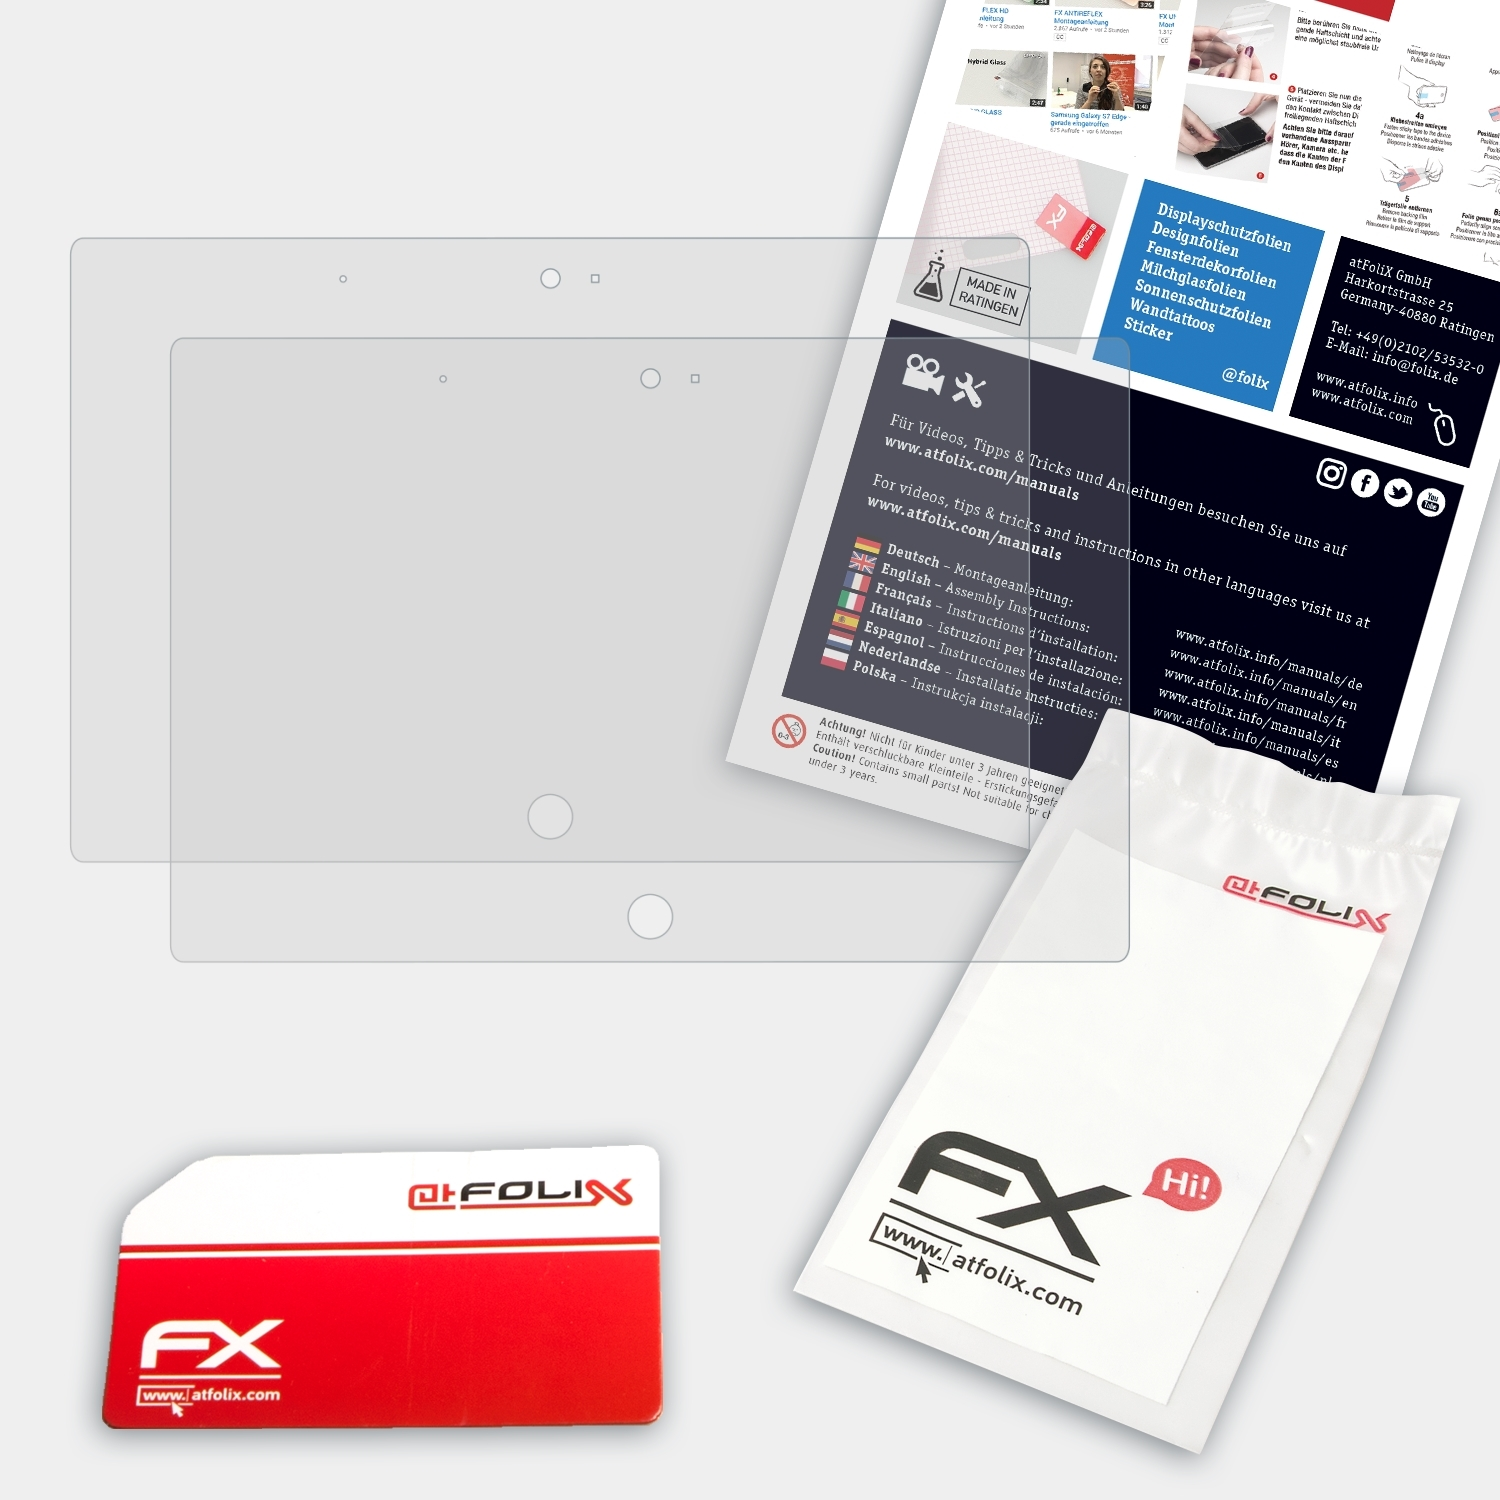 2x Displayschutz(für Stylistic ATFOLIX Q702) Fujitsu FX-Antireflex